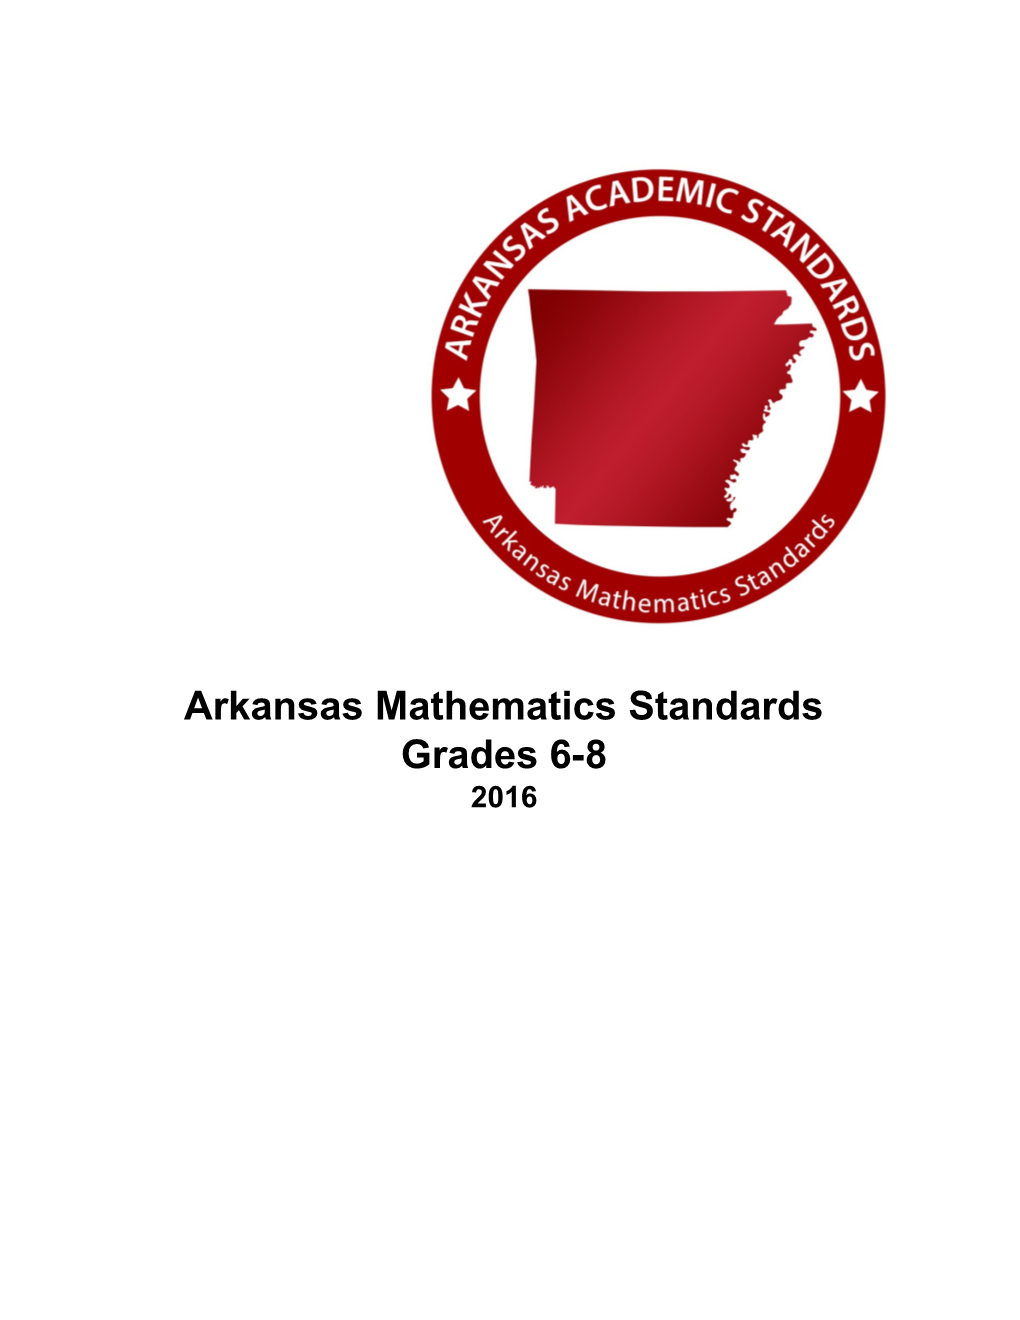 Introduction to the Grades 6-8 Arkansas Mathematicsstandards